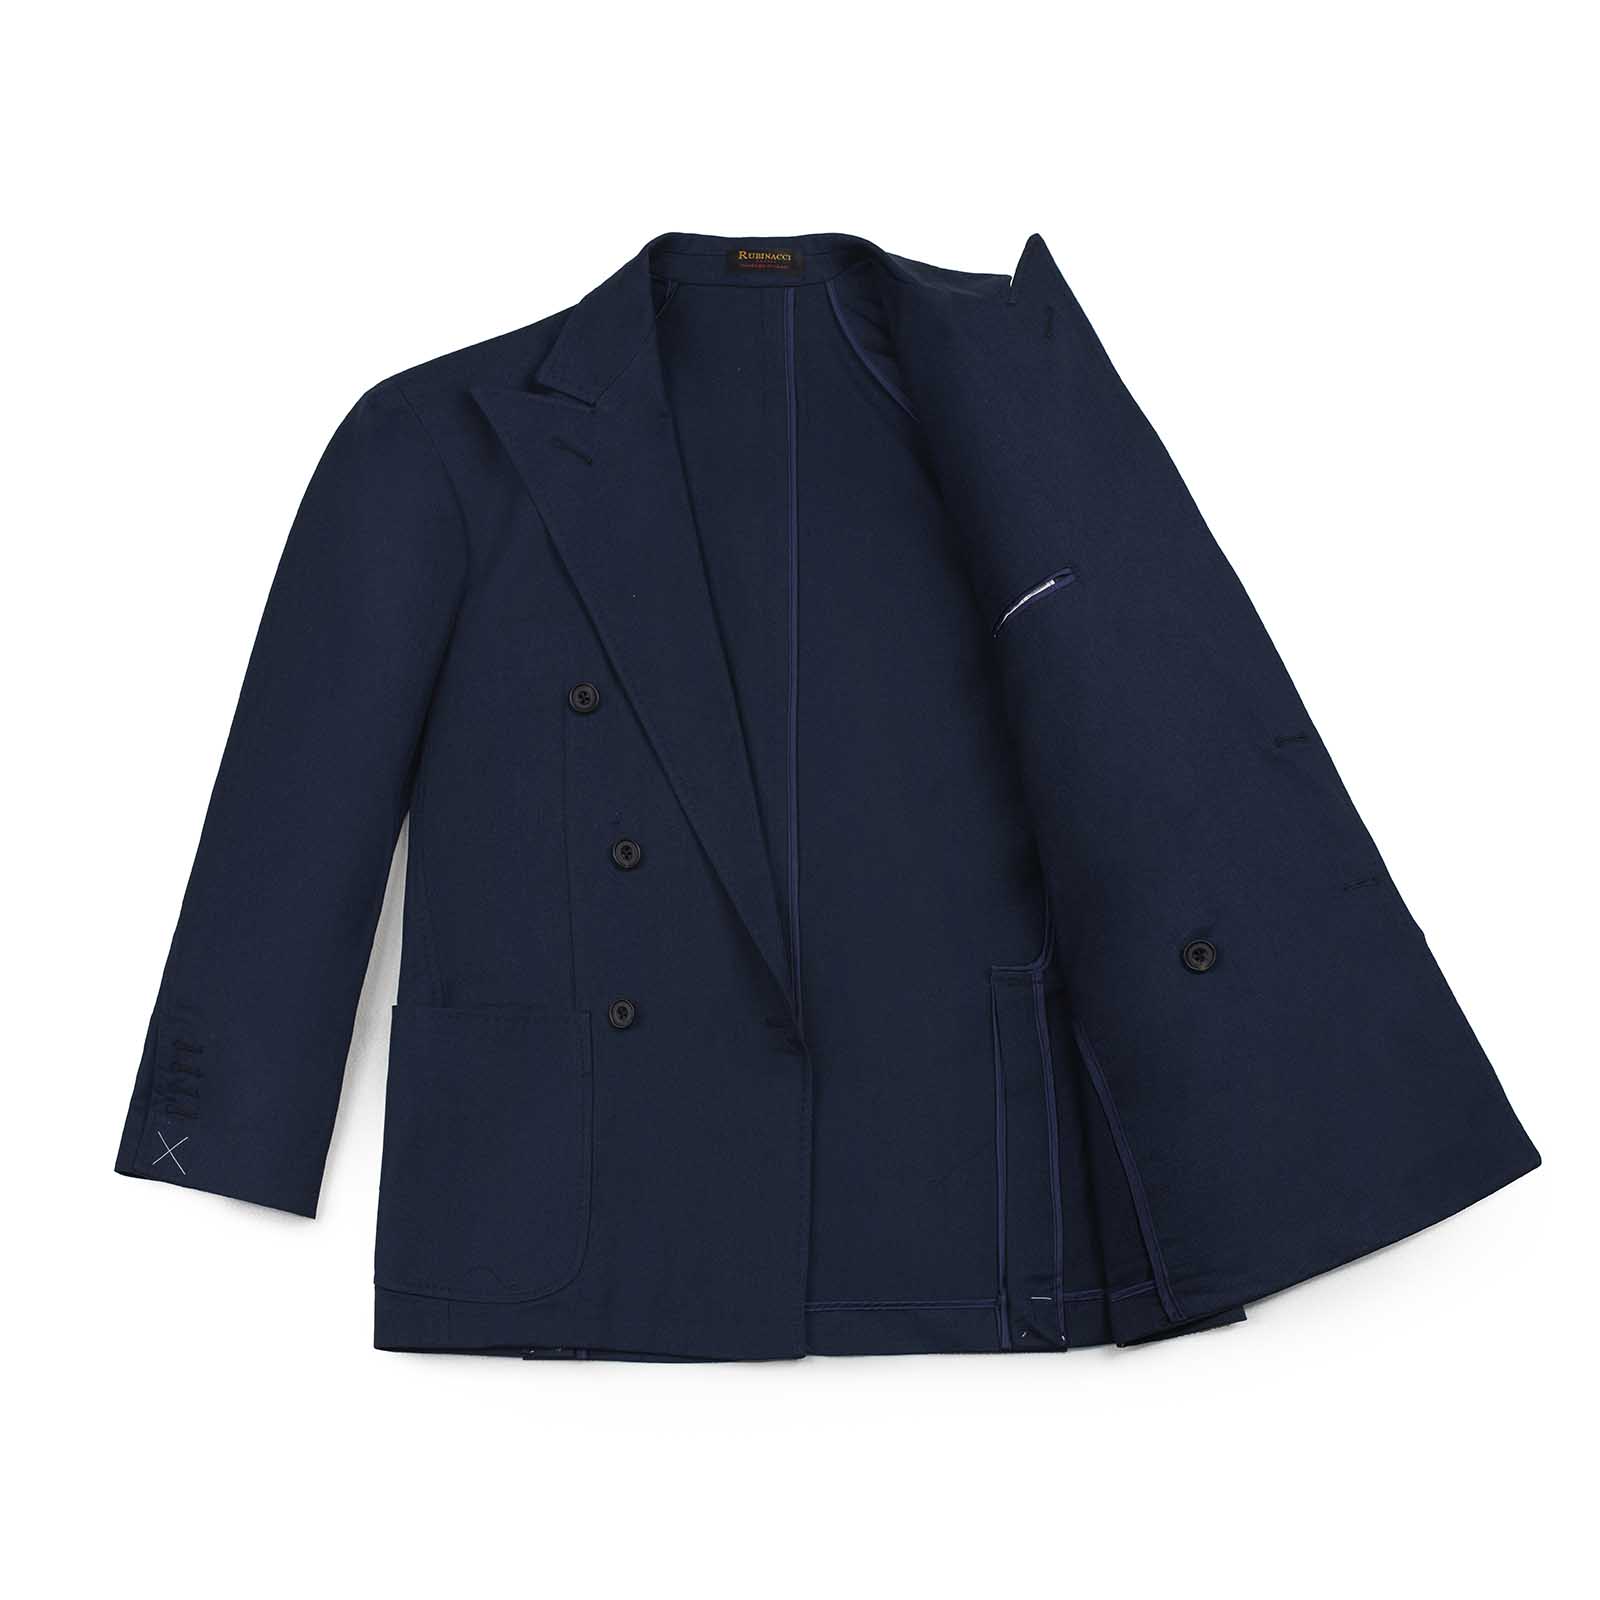 Mariano Rubinacci - Vintage archive blue cotton jacket